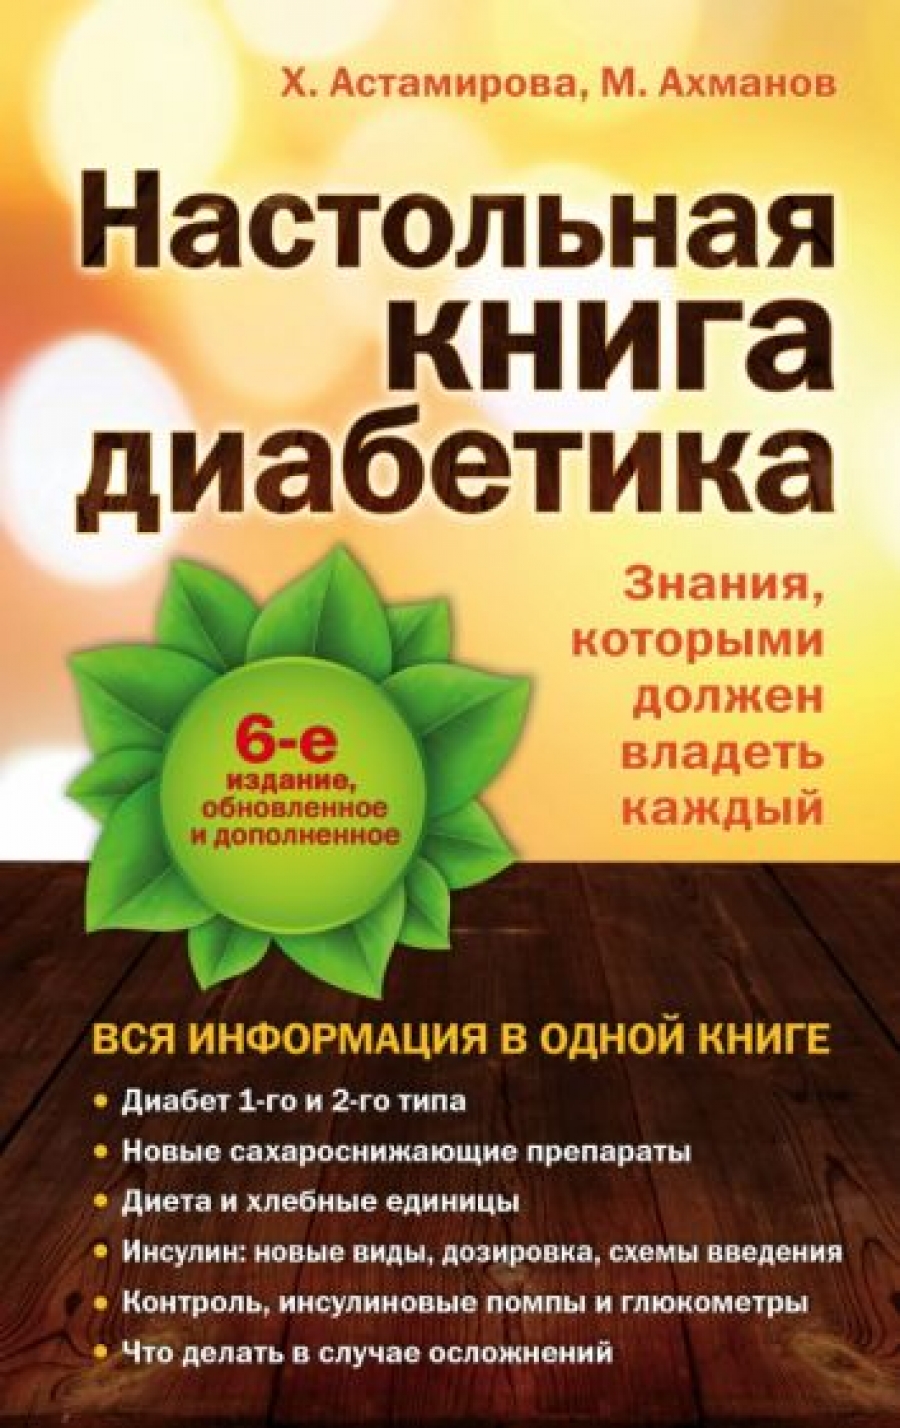 Астамирова Х.С., Ахманов М.С. Настольная книга диабетика: 6-е издание 